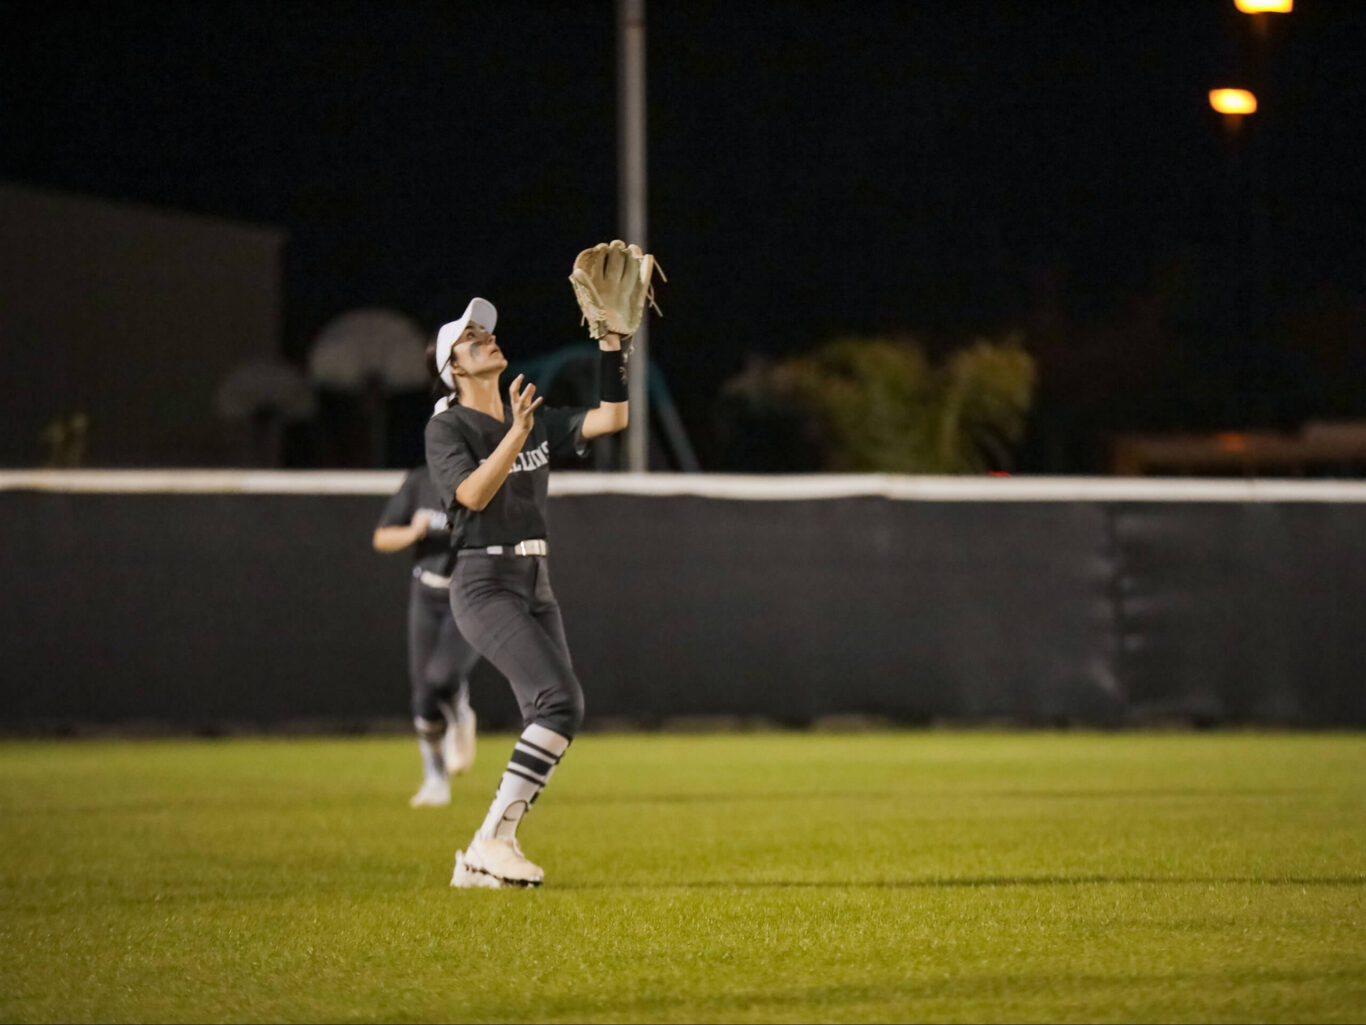 A girls softball player catching a ball on a field at night.